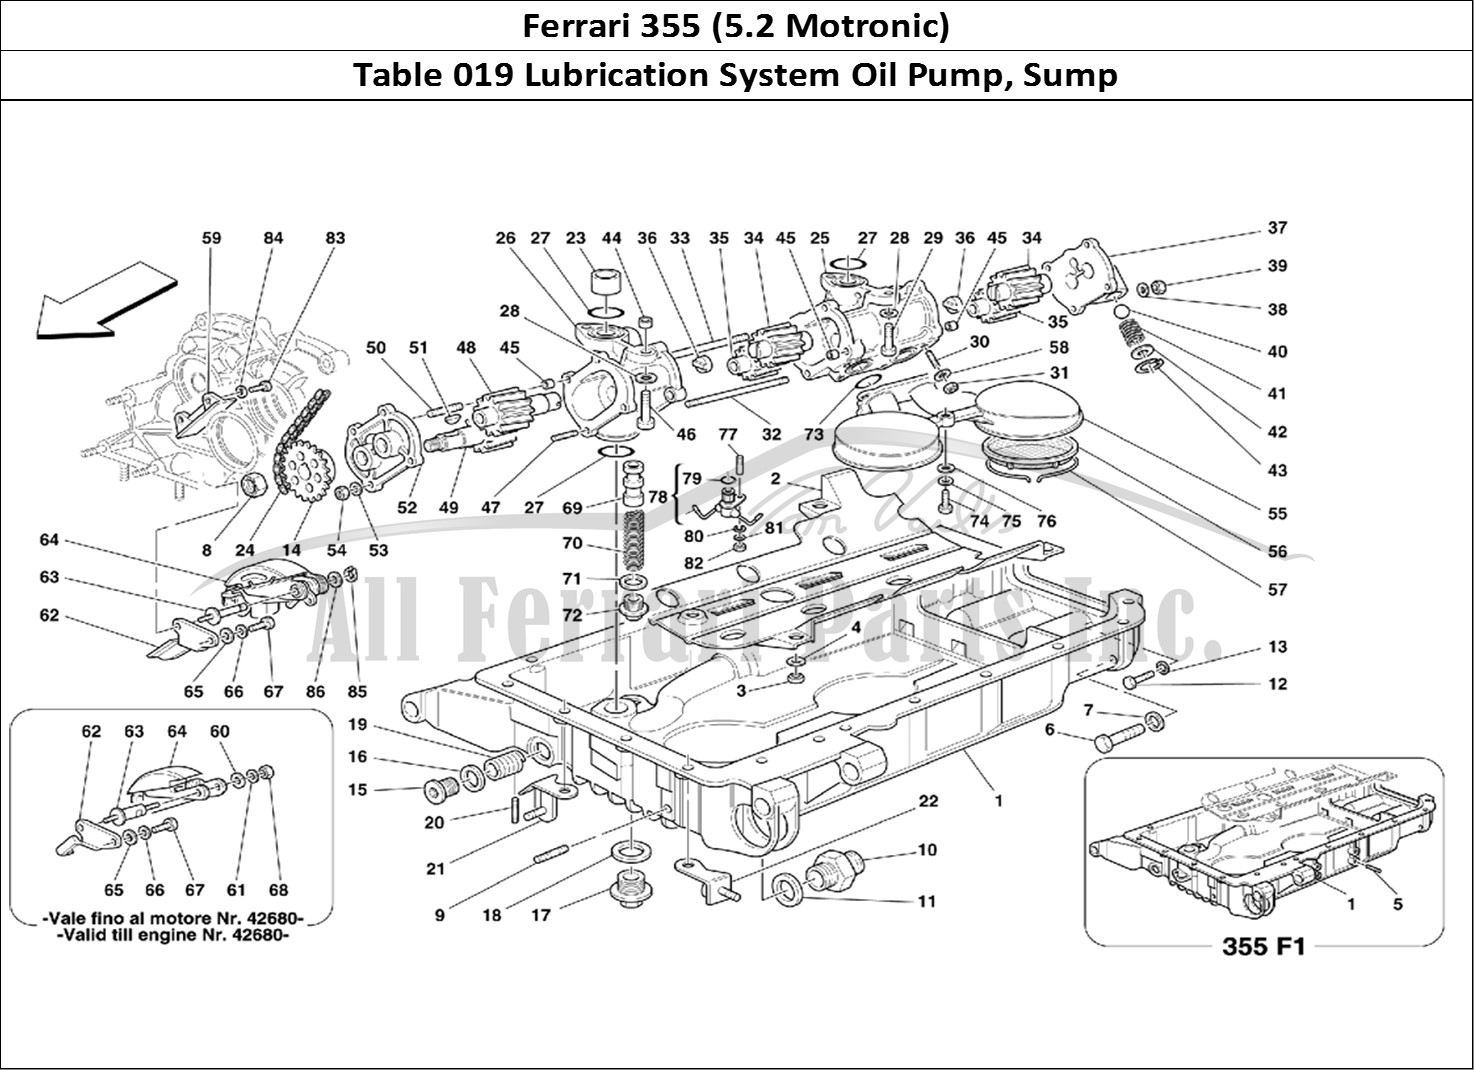 Ferrari Parts Ferrari 355 (5.2 Motronic) Page 019 Pumps and Oil Sump